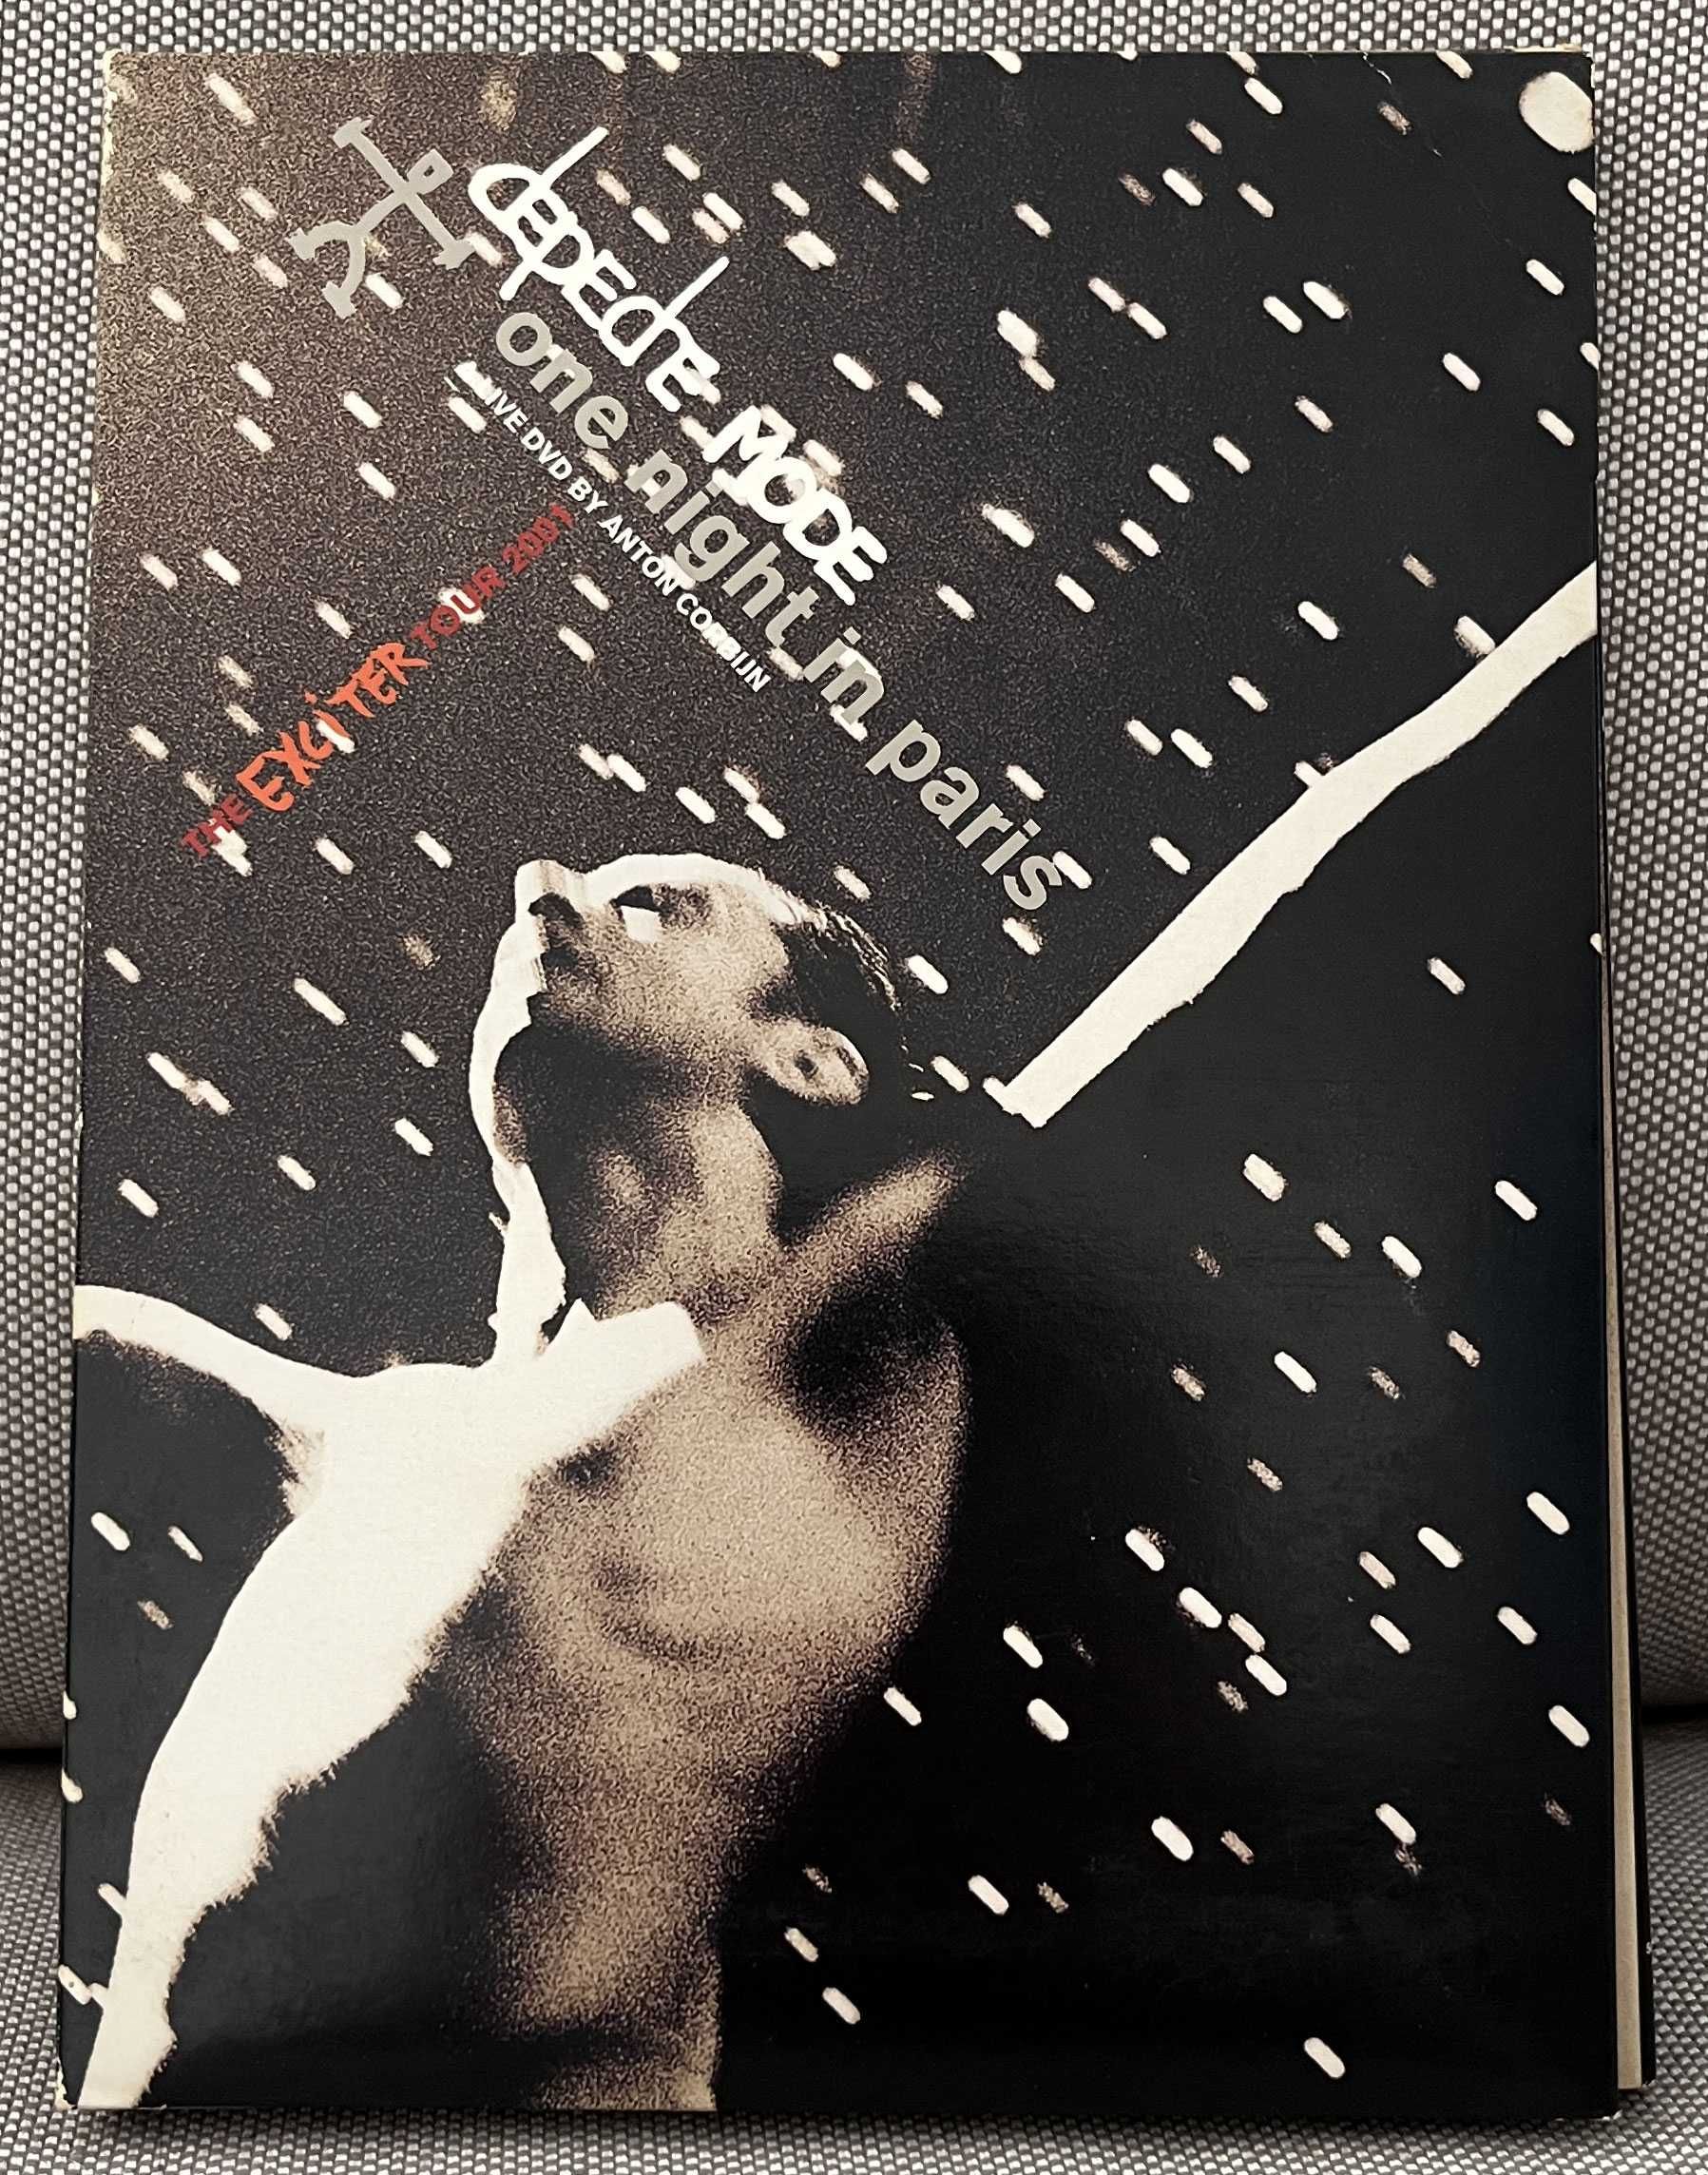 Depeche Mode One Night In Paris 2001 DVD